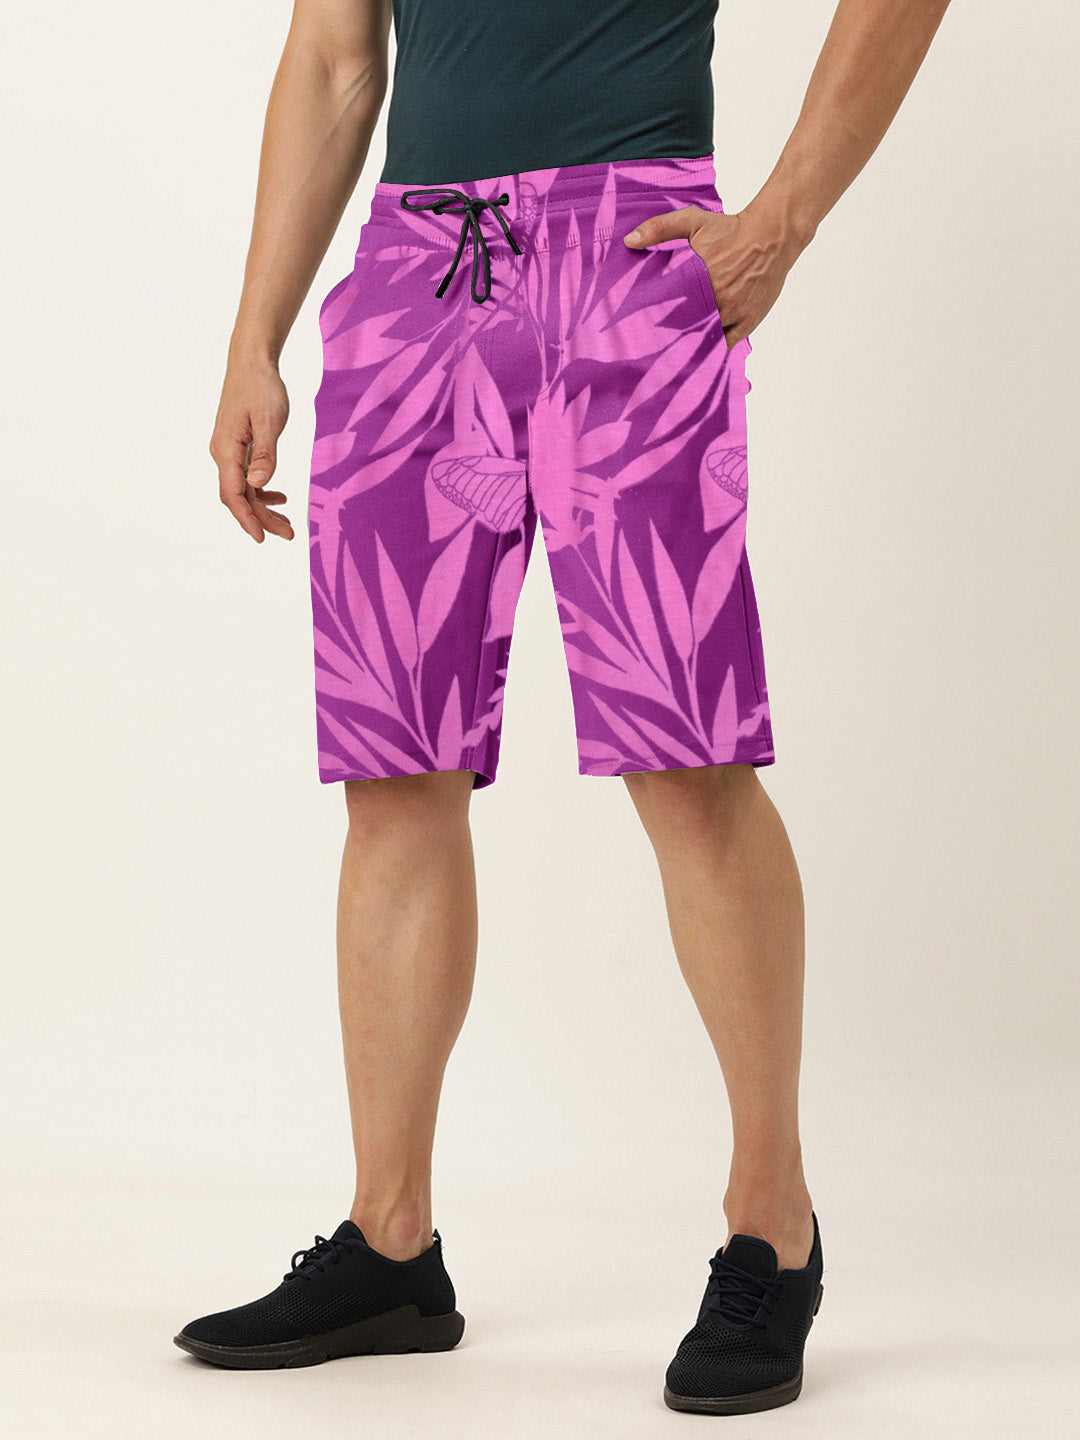 Next Summer Single Jersey Short For Men-Pink with Allover Leaf Print-SP2049